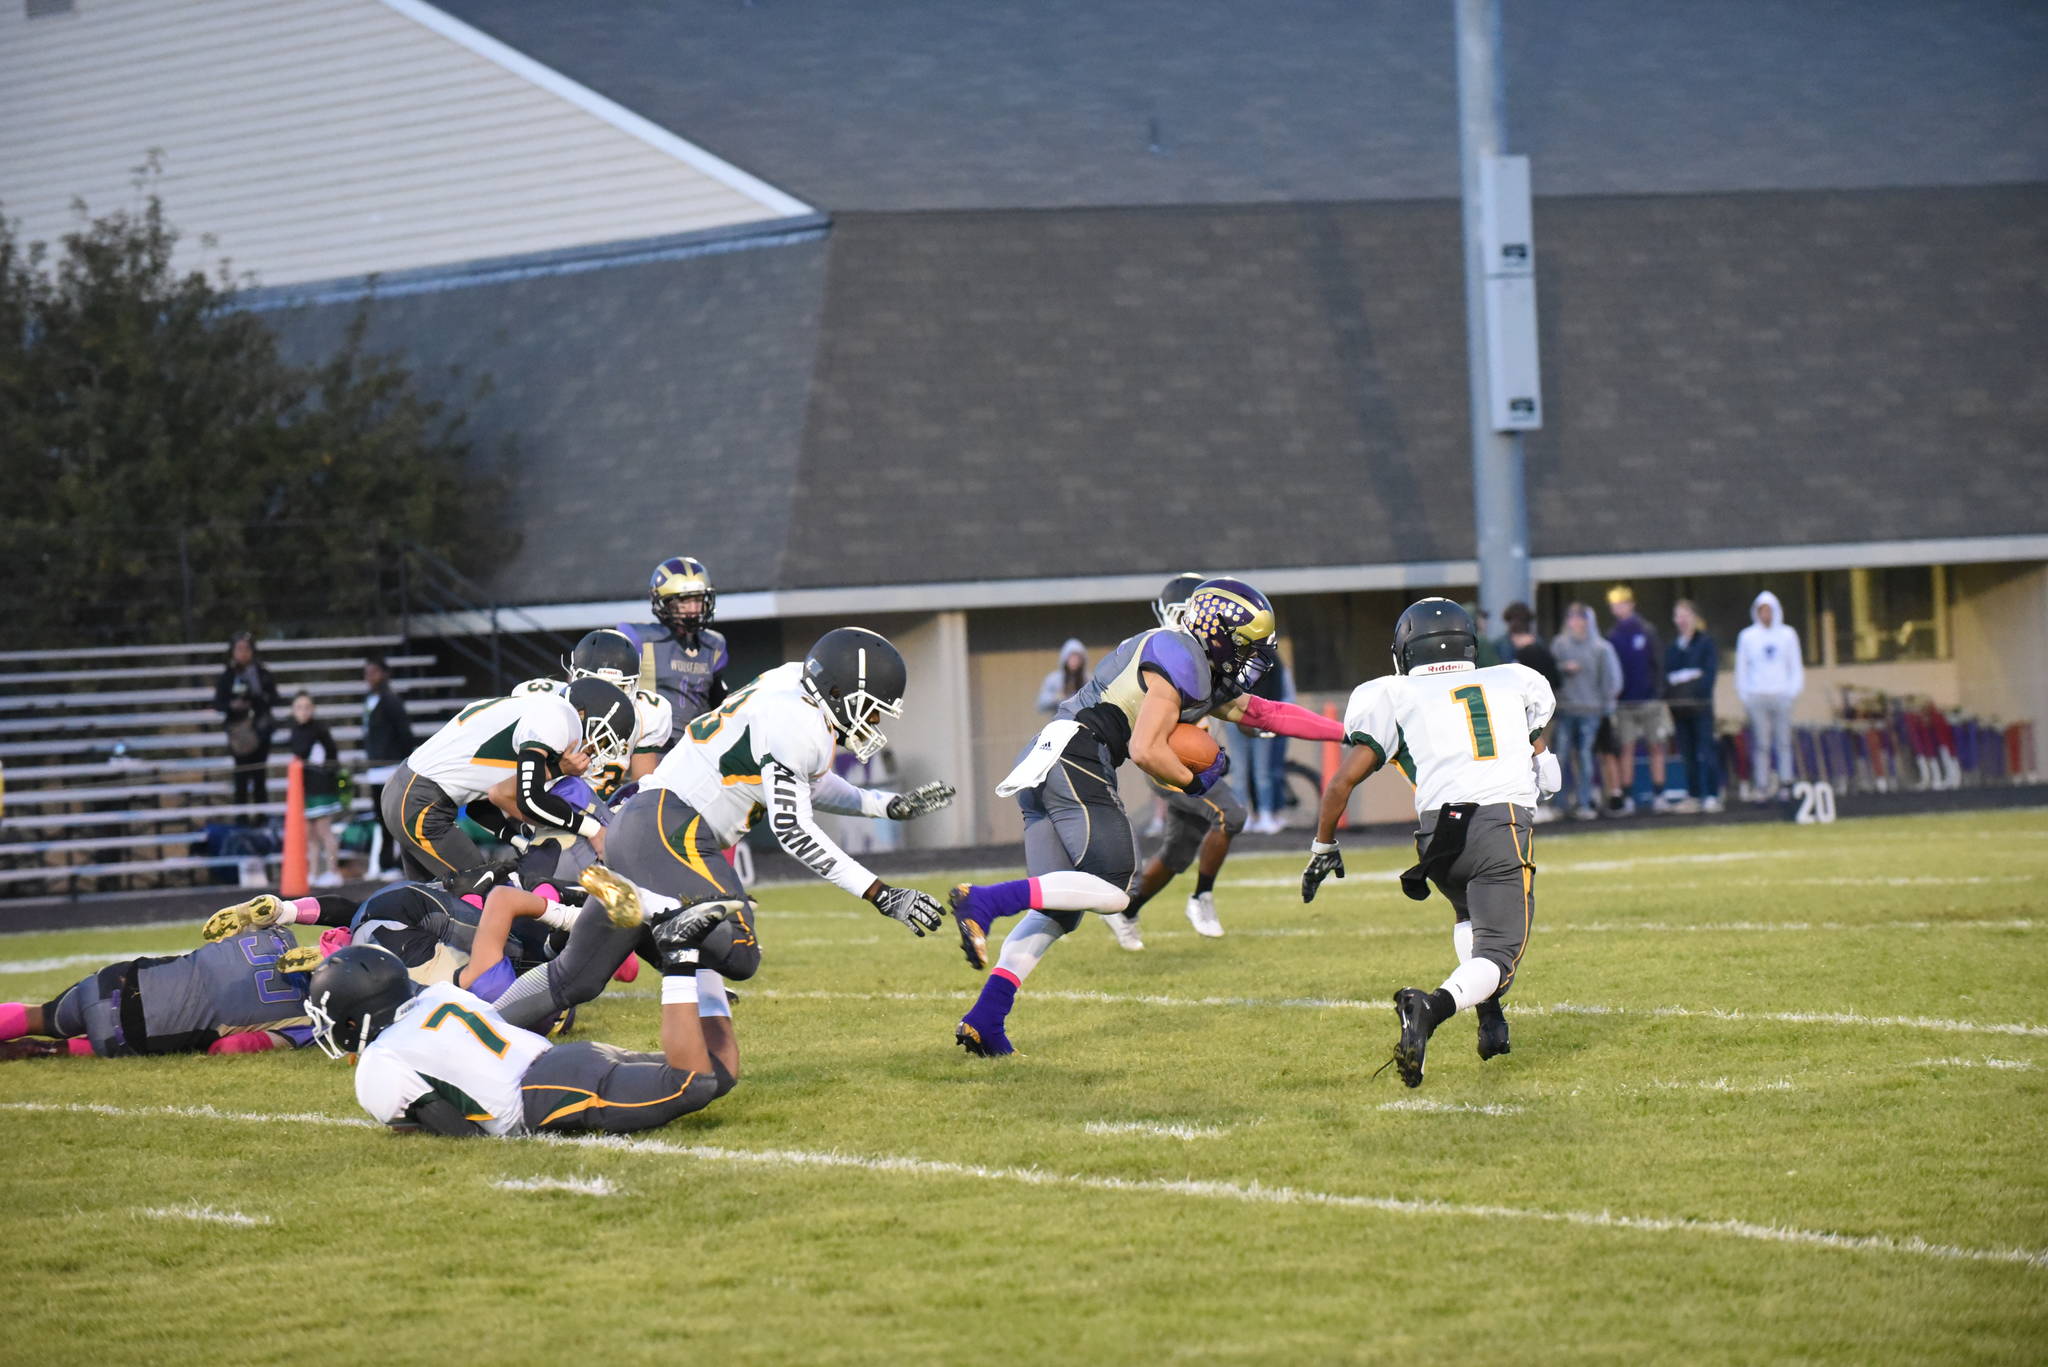 #22 Kyson Jackson blazes toward the goal line to score one of several touchdowns. John Stimpson/Contributed photo.